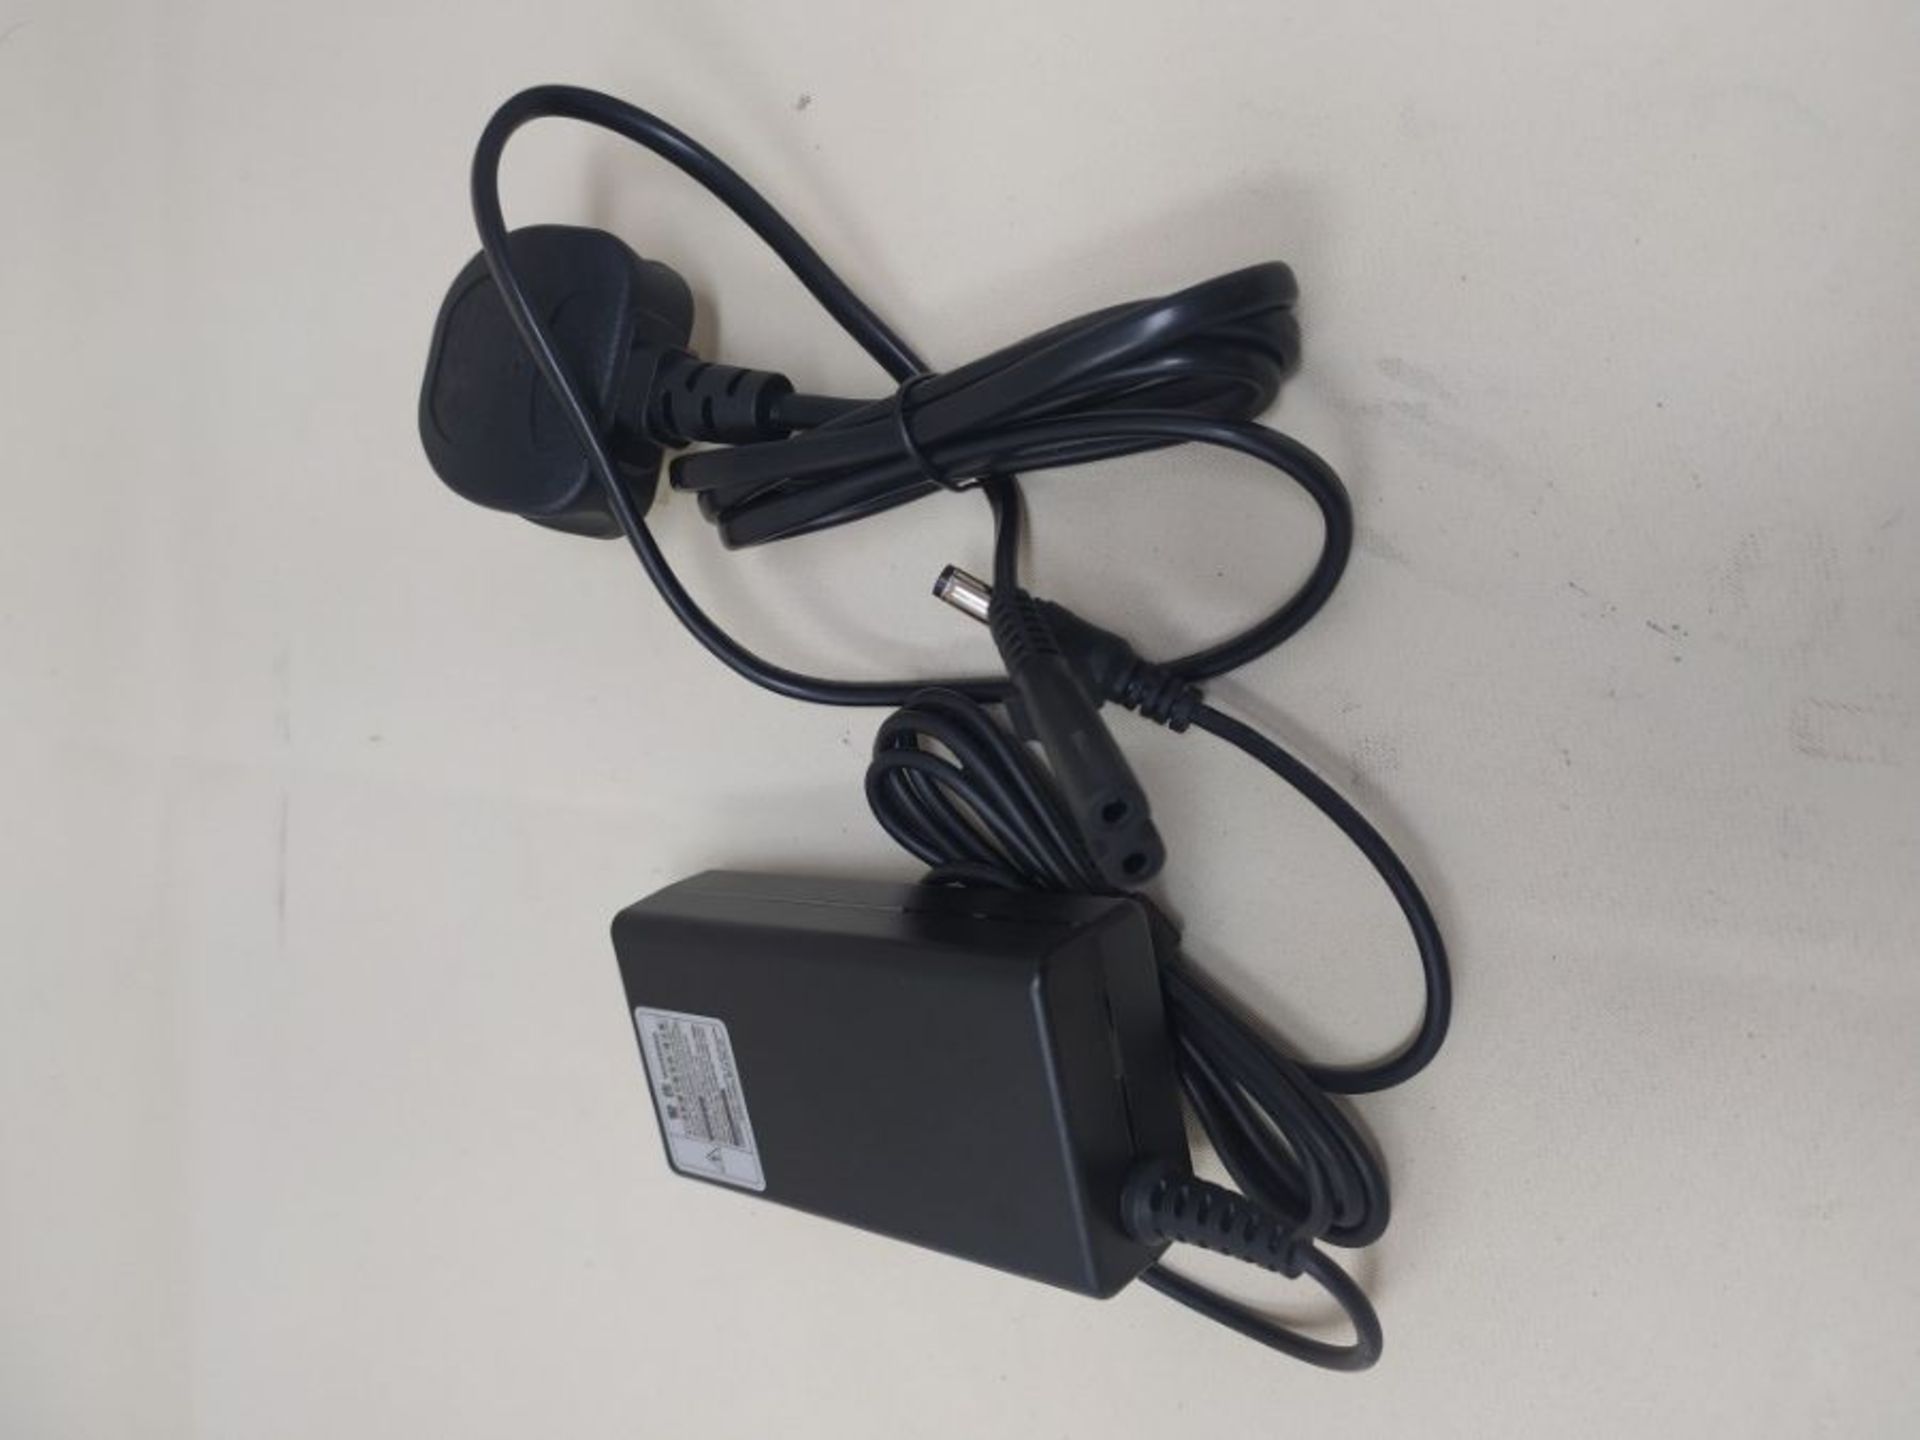 TAIFU 19VDC Ac Adapter UK Plug Cable for JBL Xtreme, Xtreme 2, Xtreme, JBL Boombox Por - Image 2 of 2